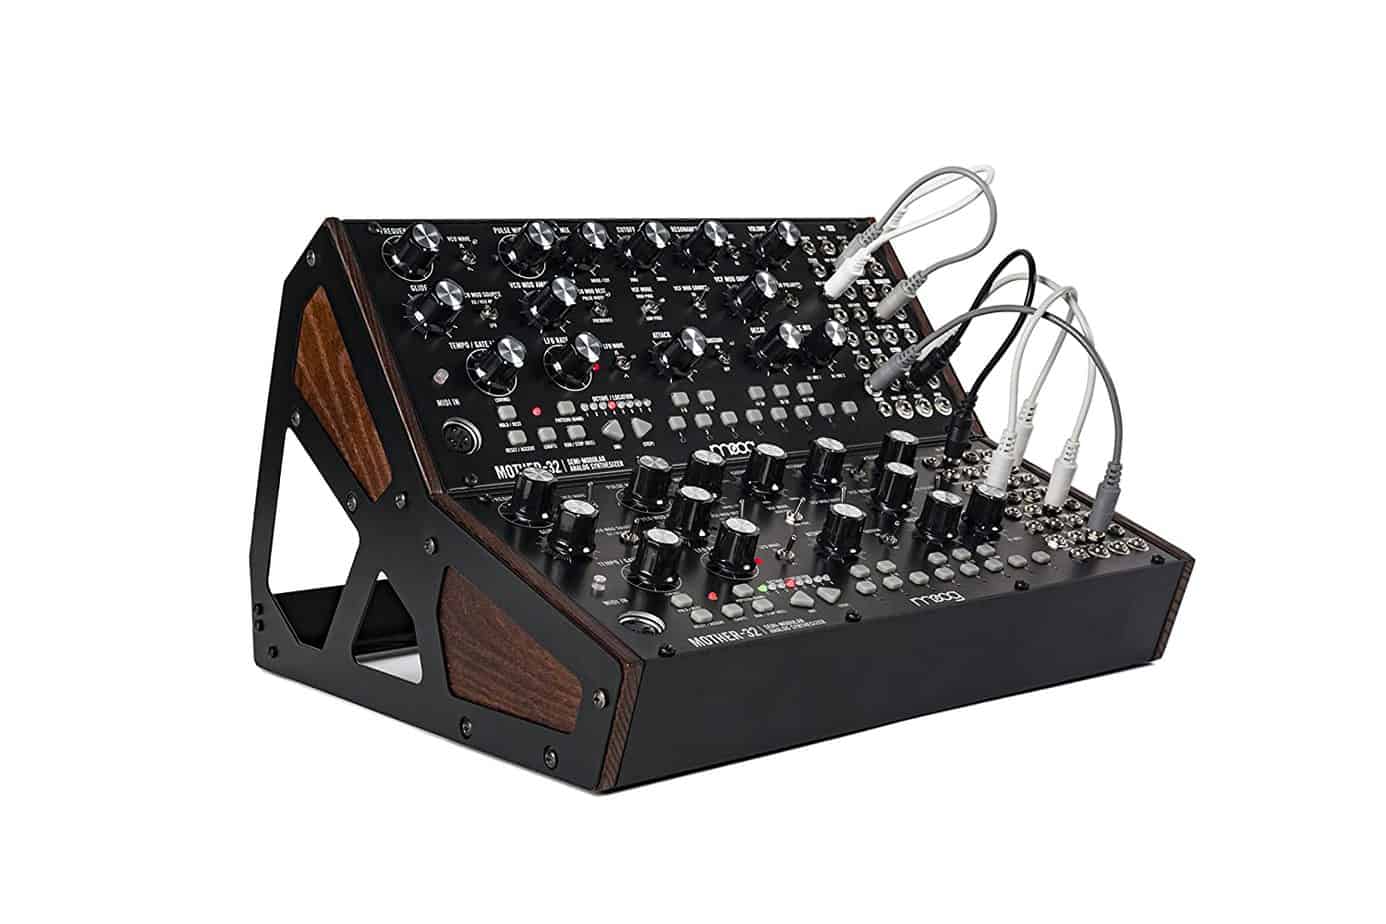 Best modular synth – Moog mother 32 semi-modular synthesizer 